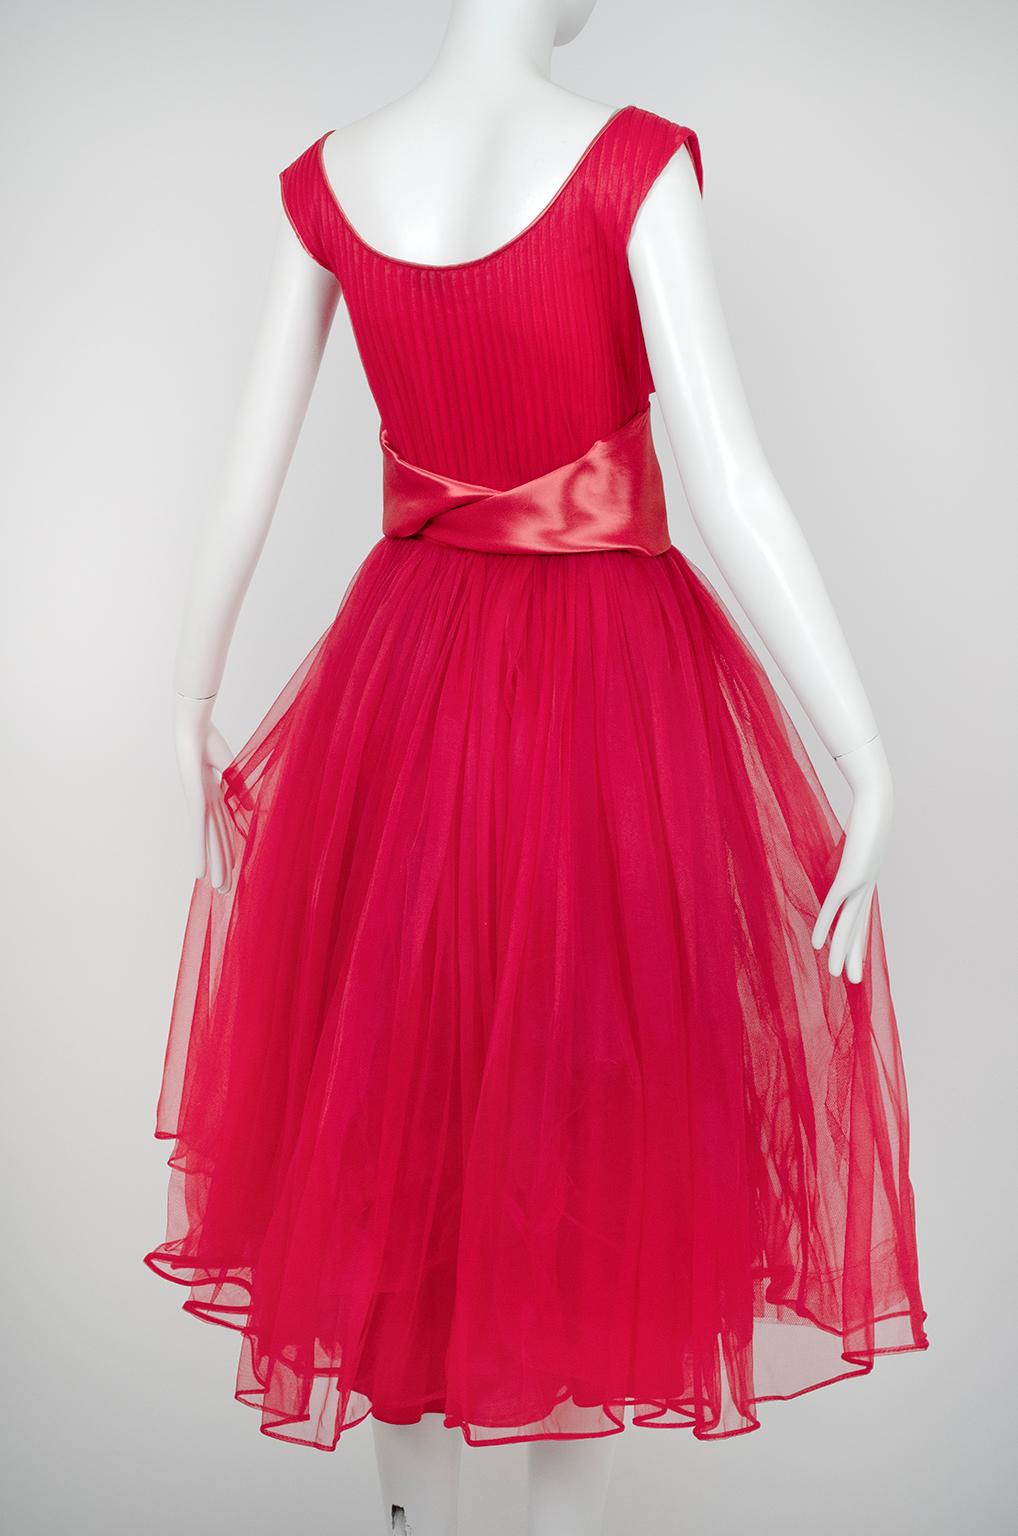 Women's or Men's Emma Domb Red Bib Front Ballerina Party Dress with Satin Cummerbund – S, 1950s For Sale